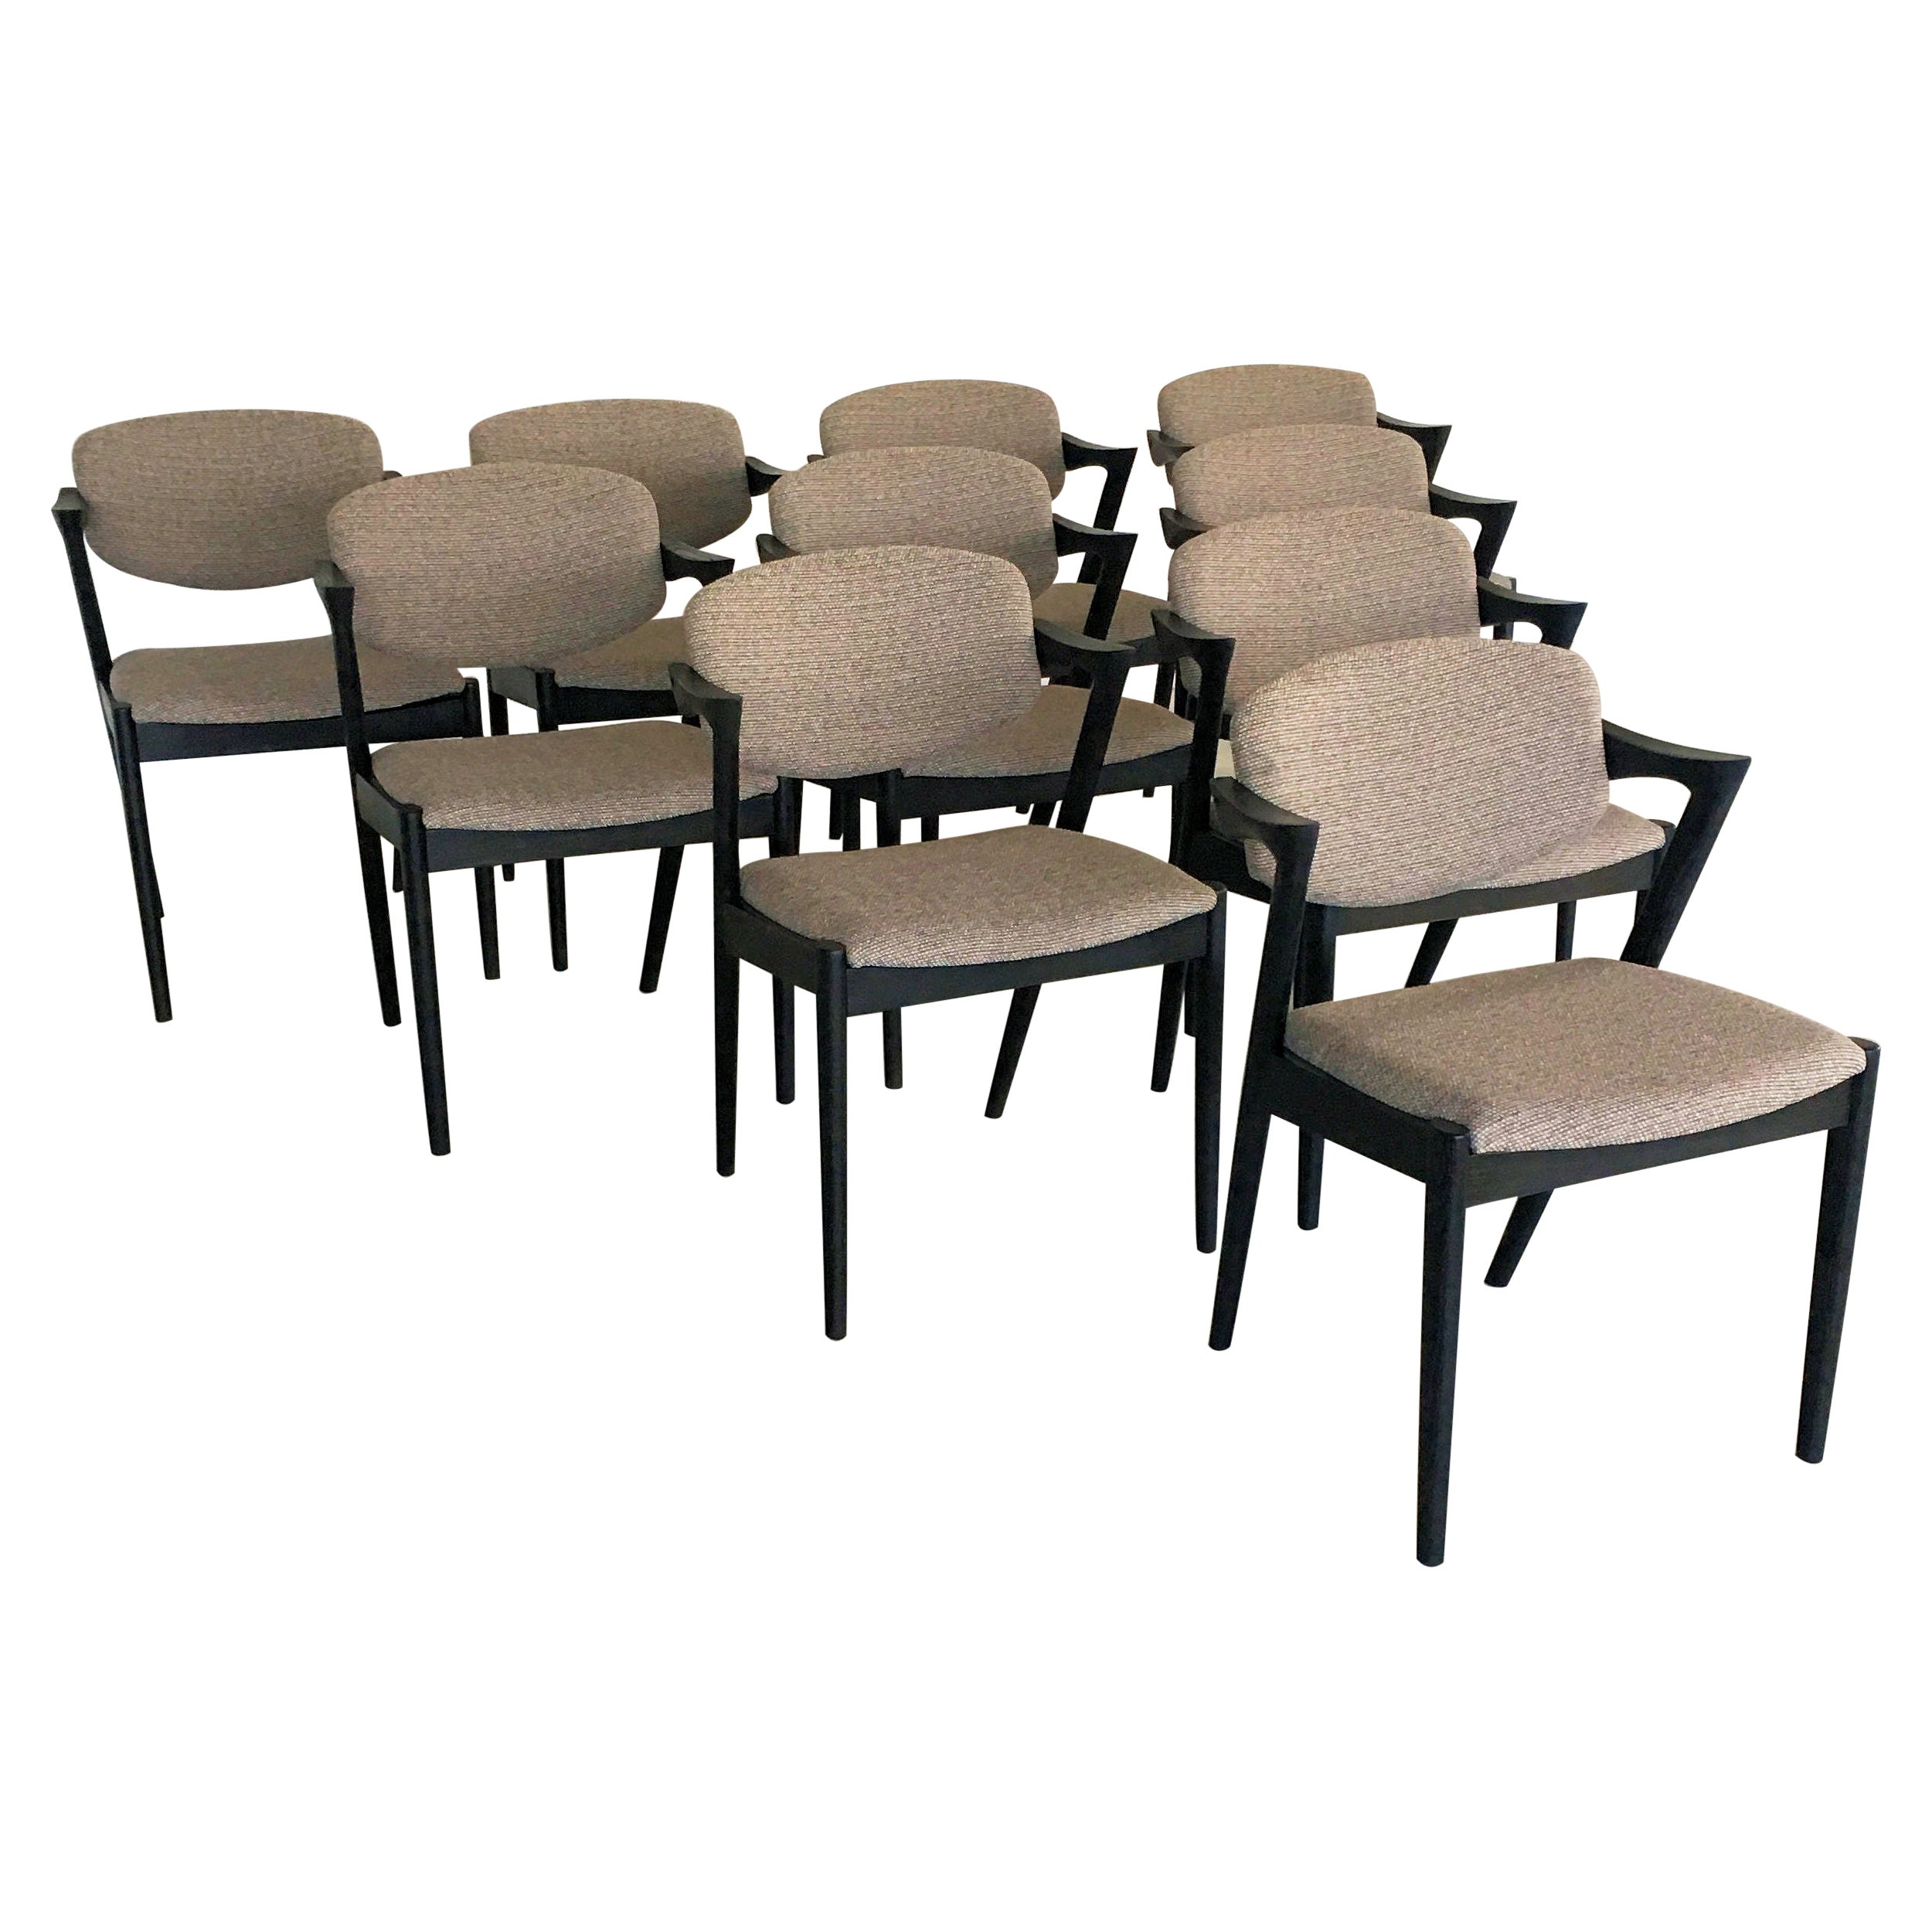 Sechs restaurierte Kai Kristiansen Ebonized Dining Chairs Custom Reupholstery Included im Angebot